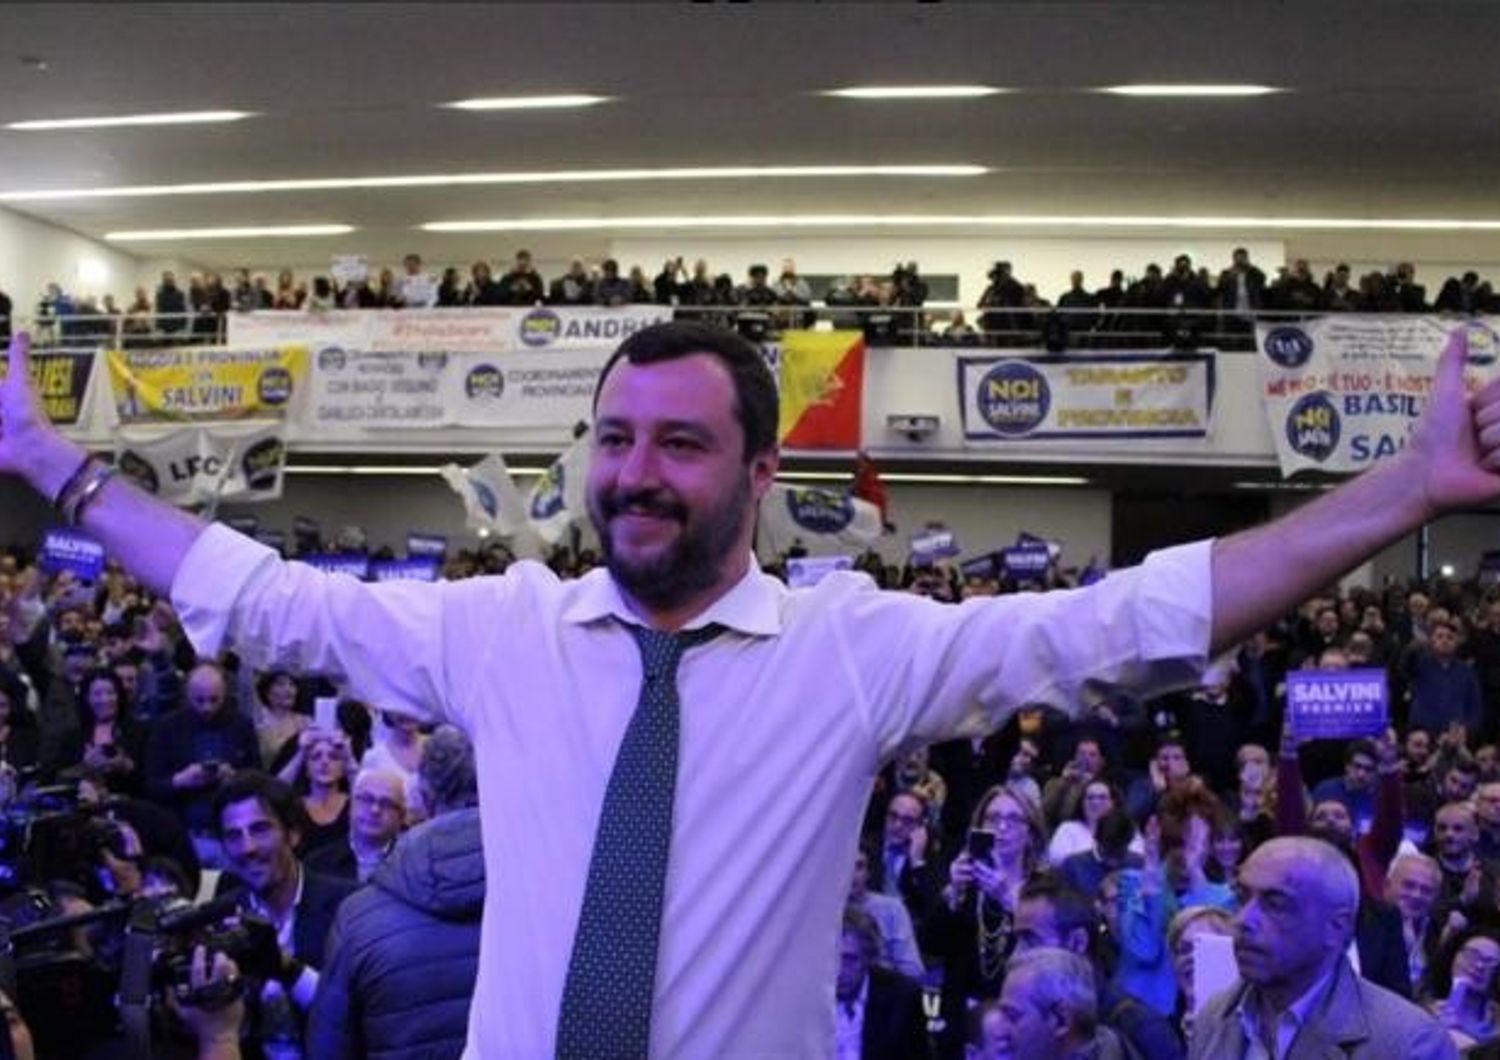 &nbsp;Salvini a Napoli